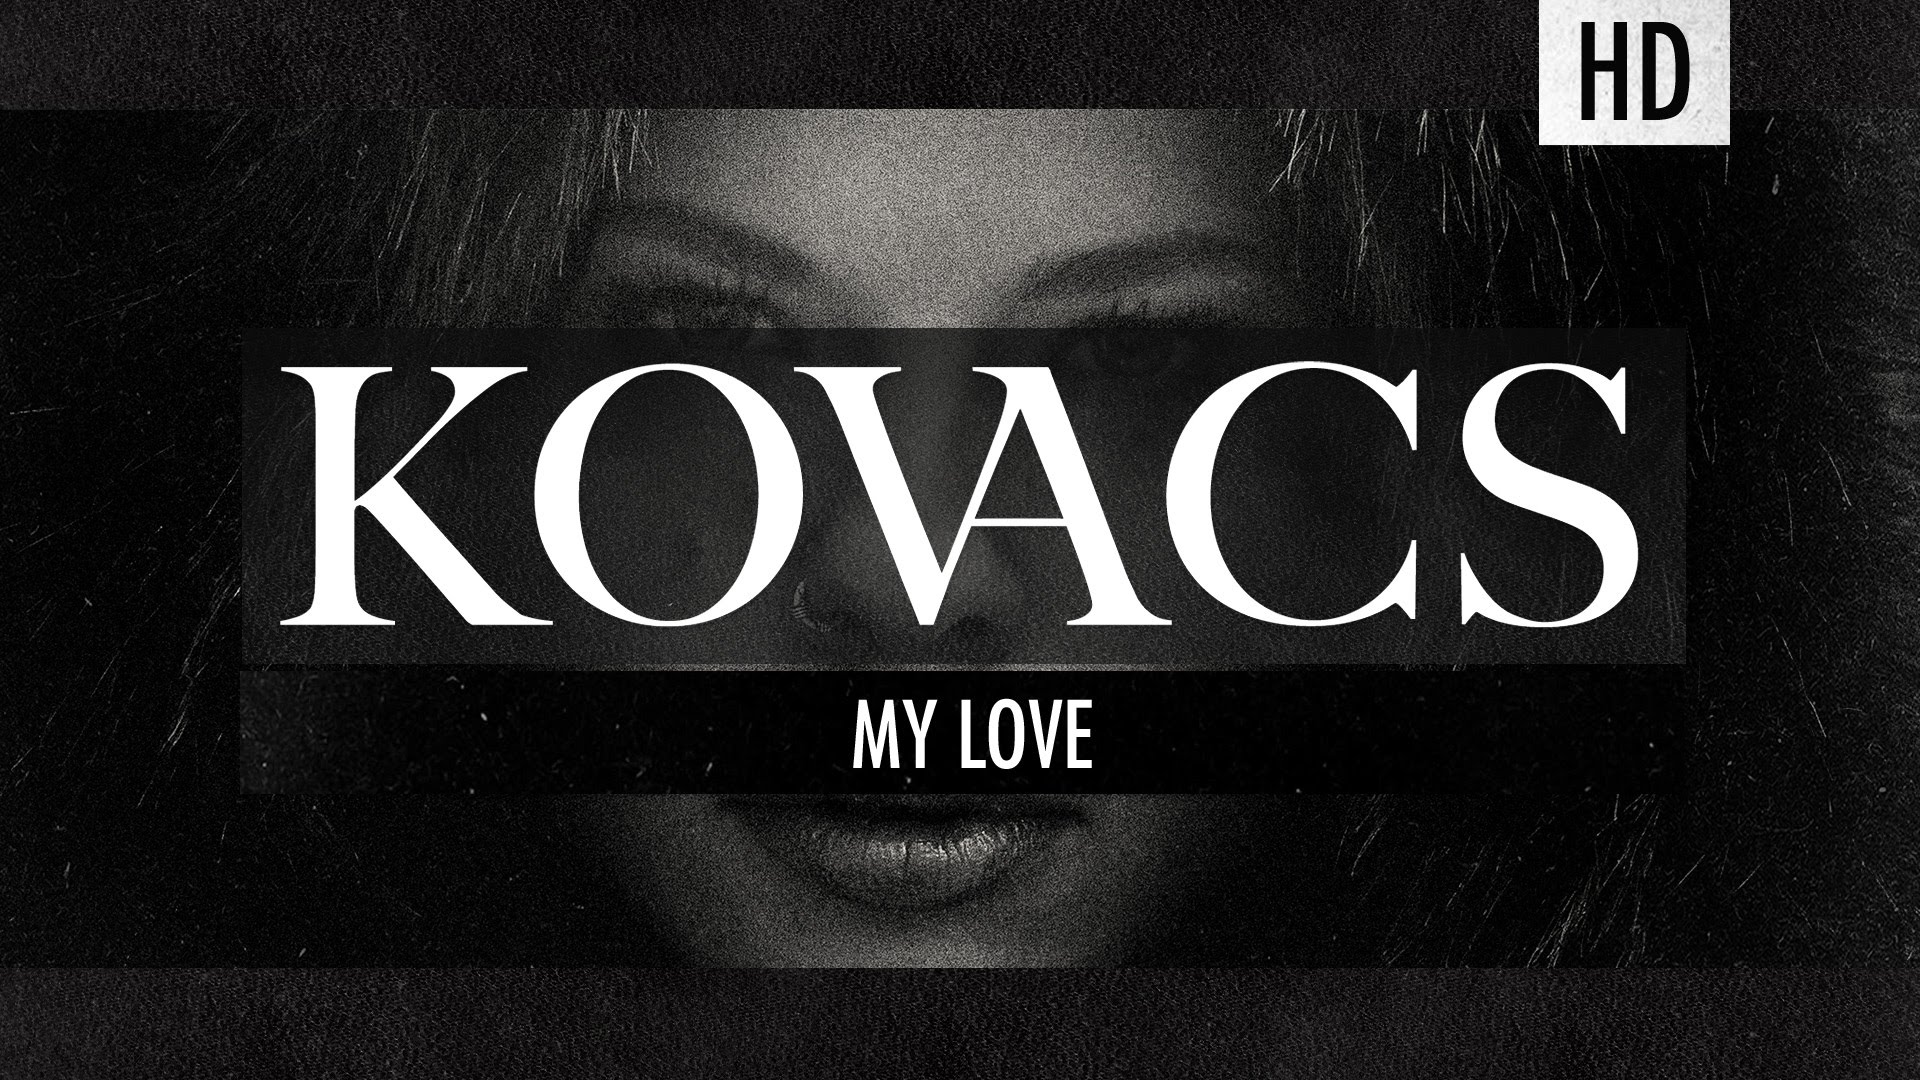 Kovacs - My Love (Official Lyric Video) - YouTube